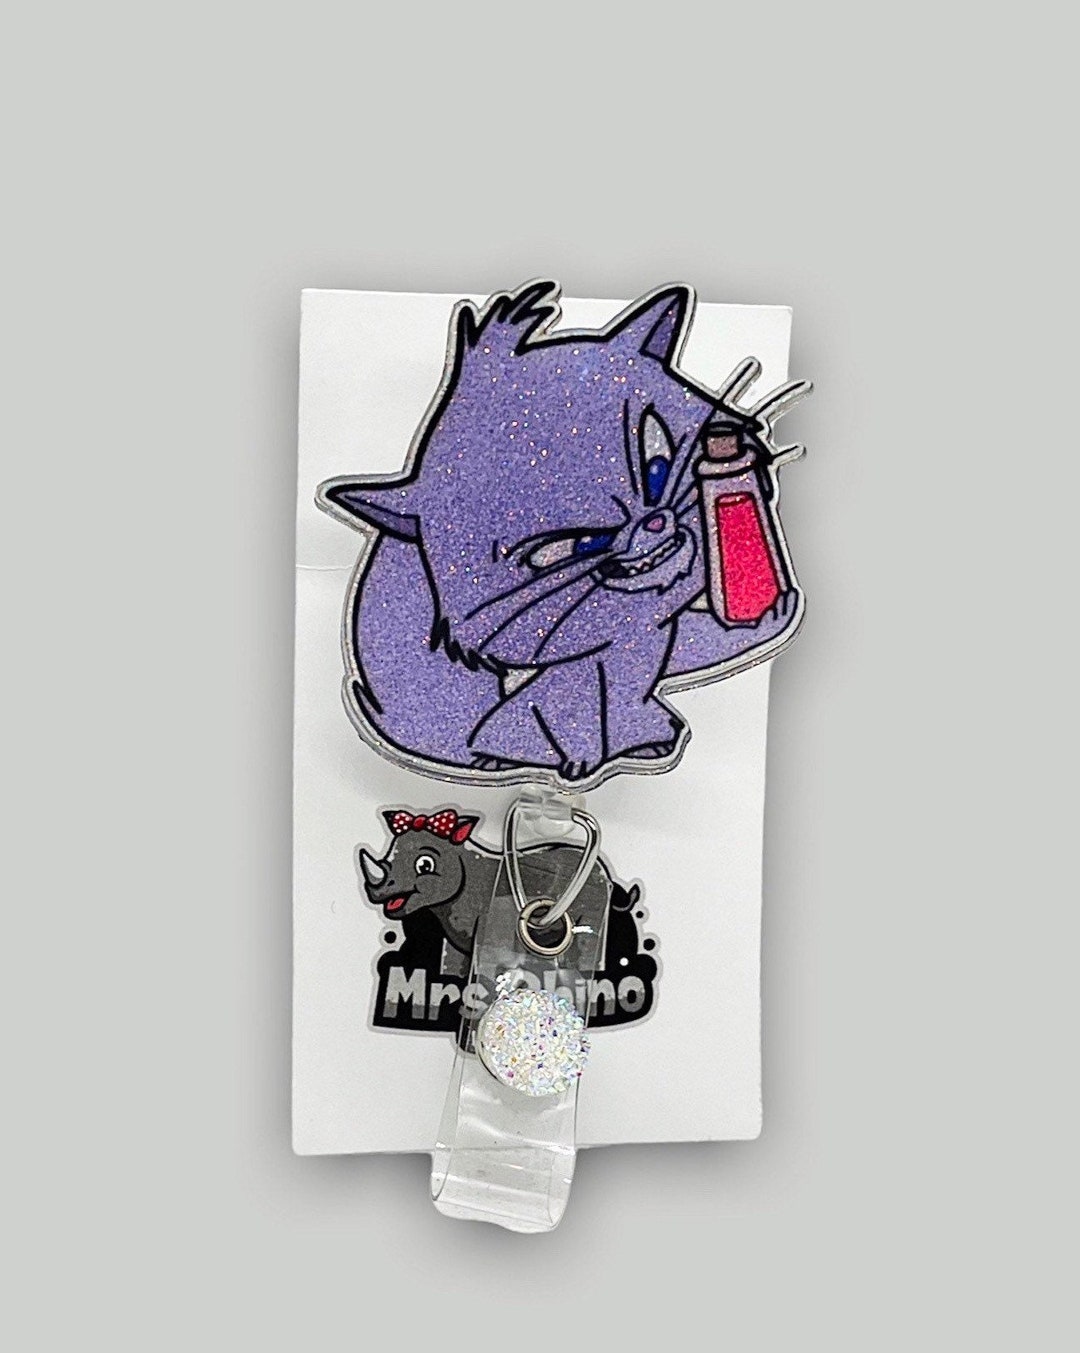 Retractable Badge Reel Cat ID Badge Badge Reels Funny Cat Badge Reel Funny Badge  Reel D1 -  Norway